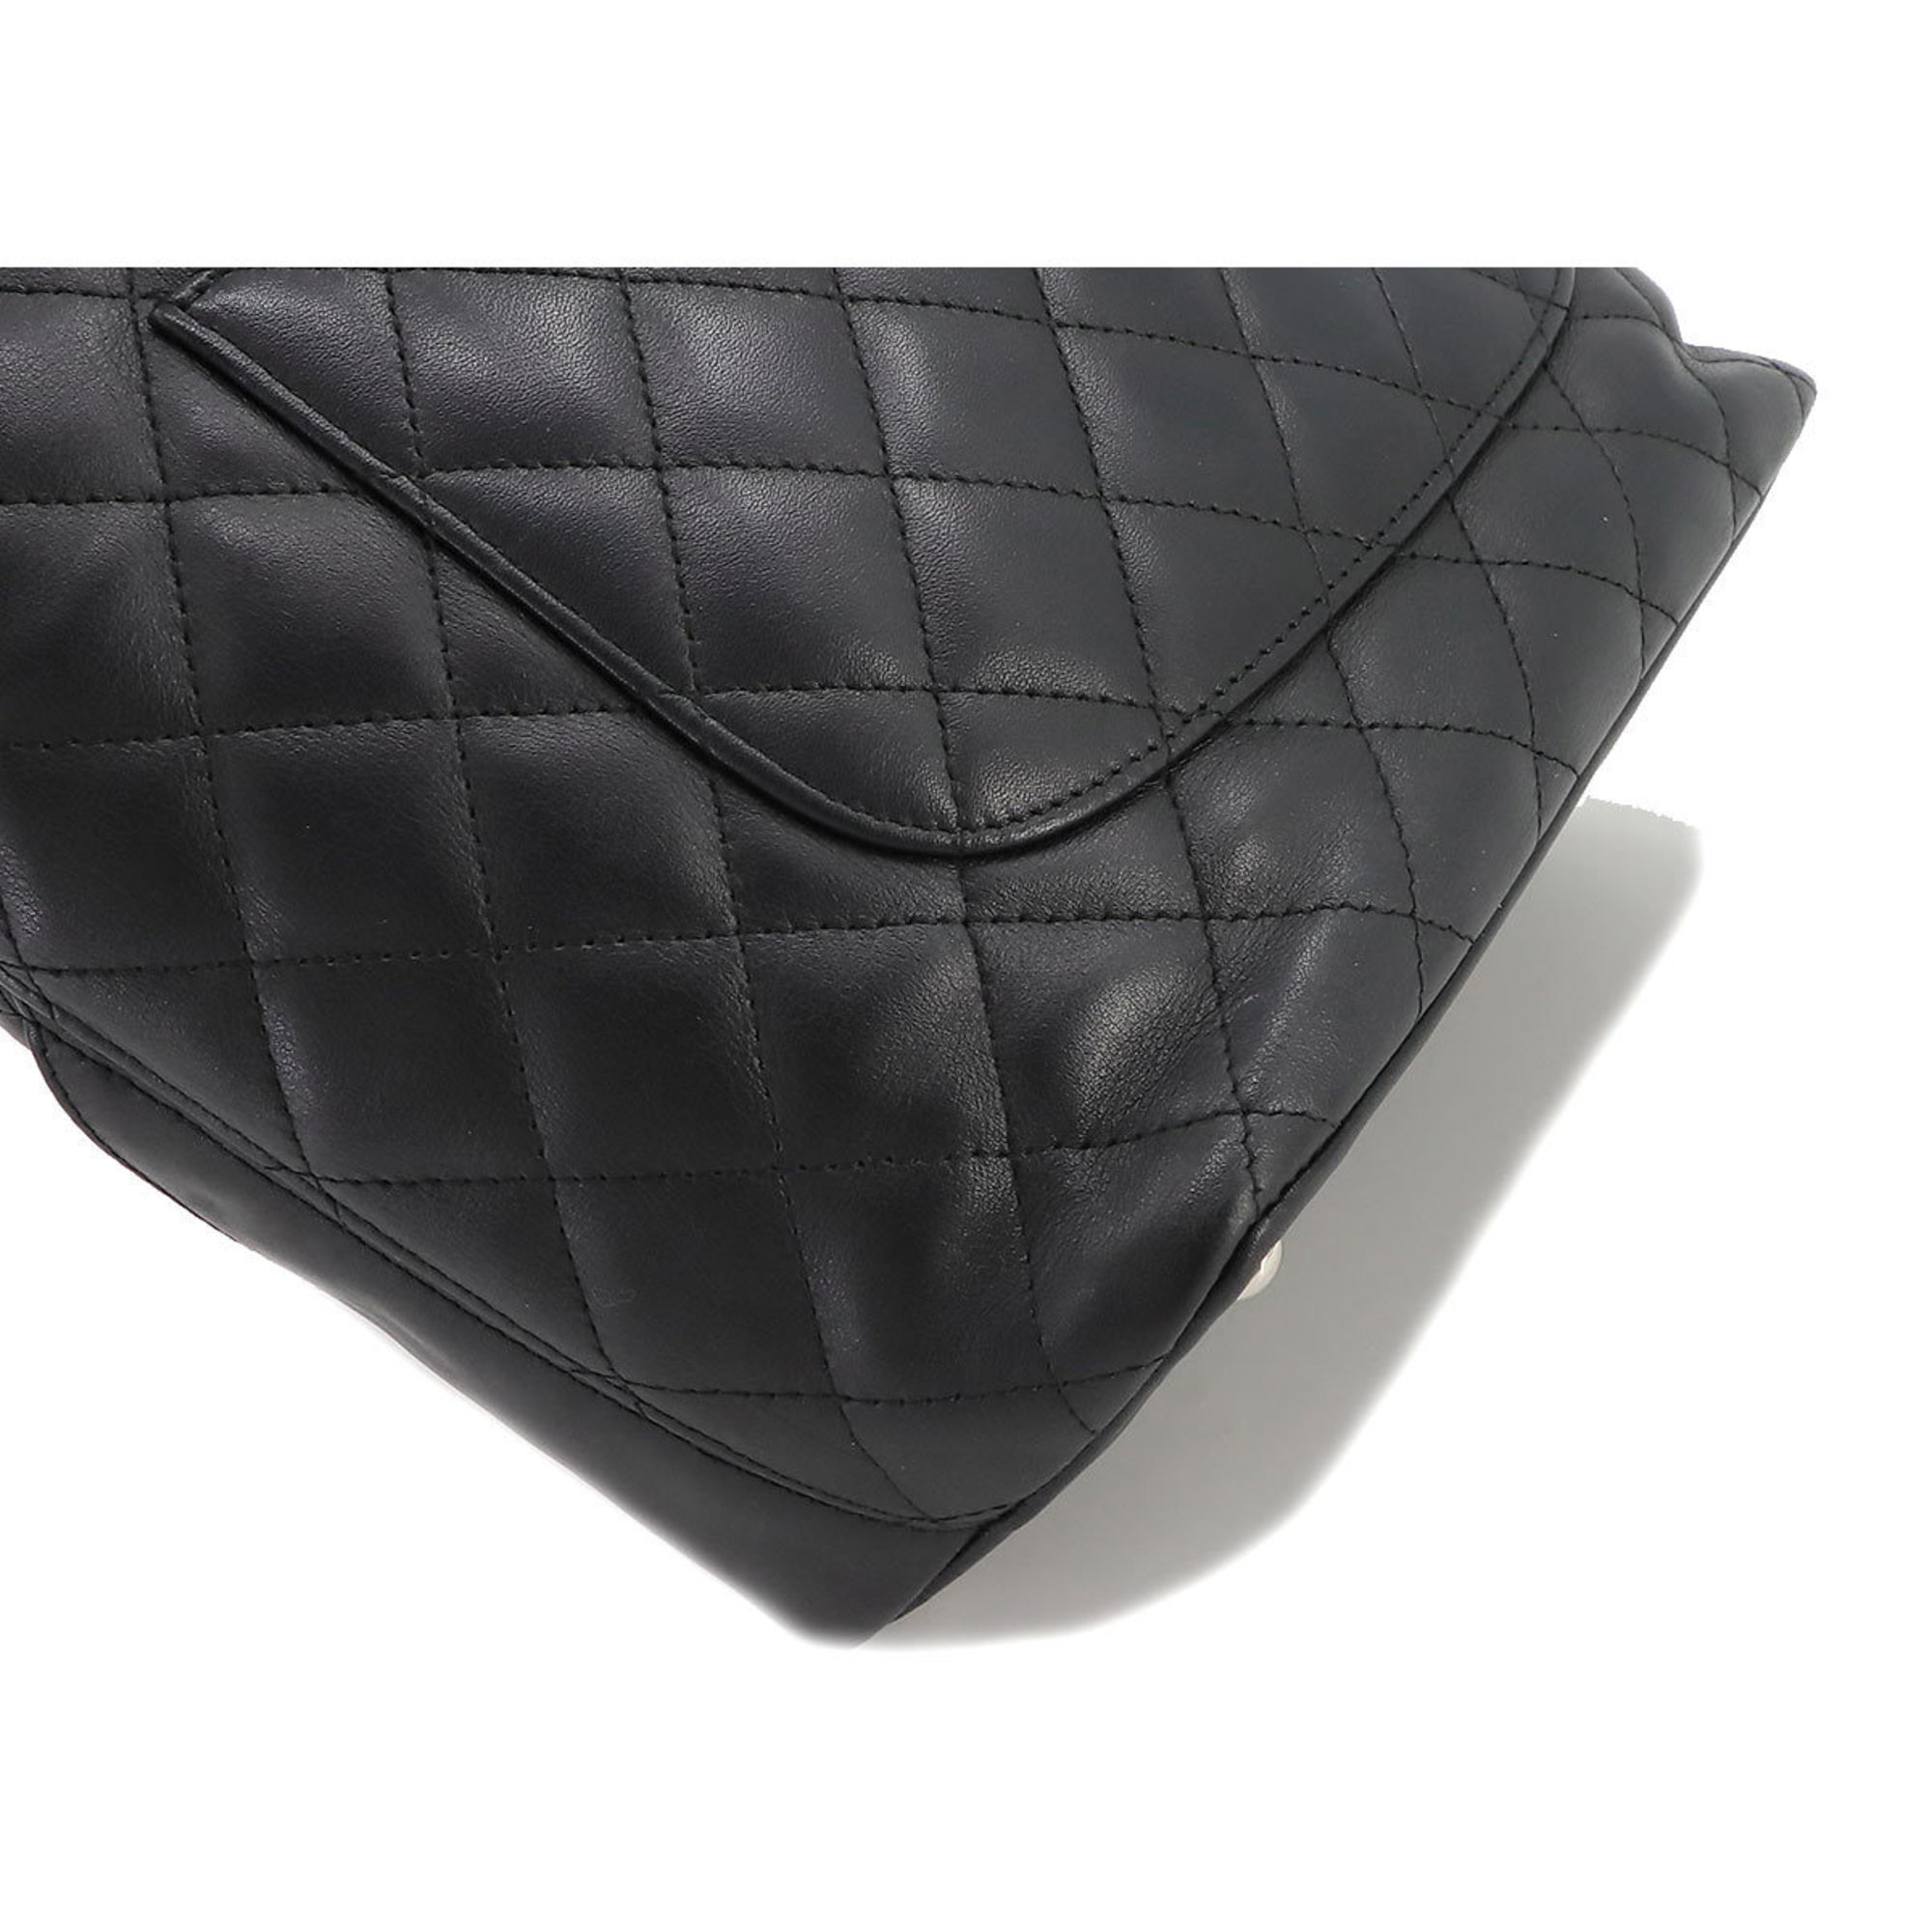 CHANEL Cambon Line Medium Tote Bag Leather Enamel Black A25167 Silver Hardware